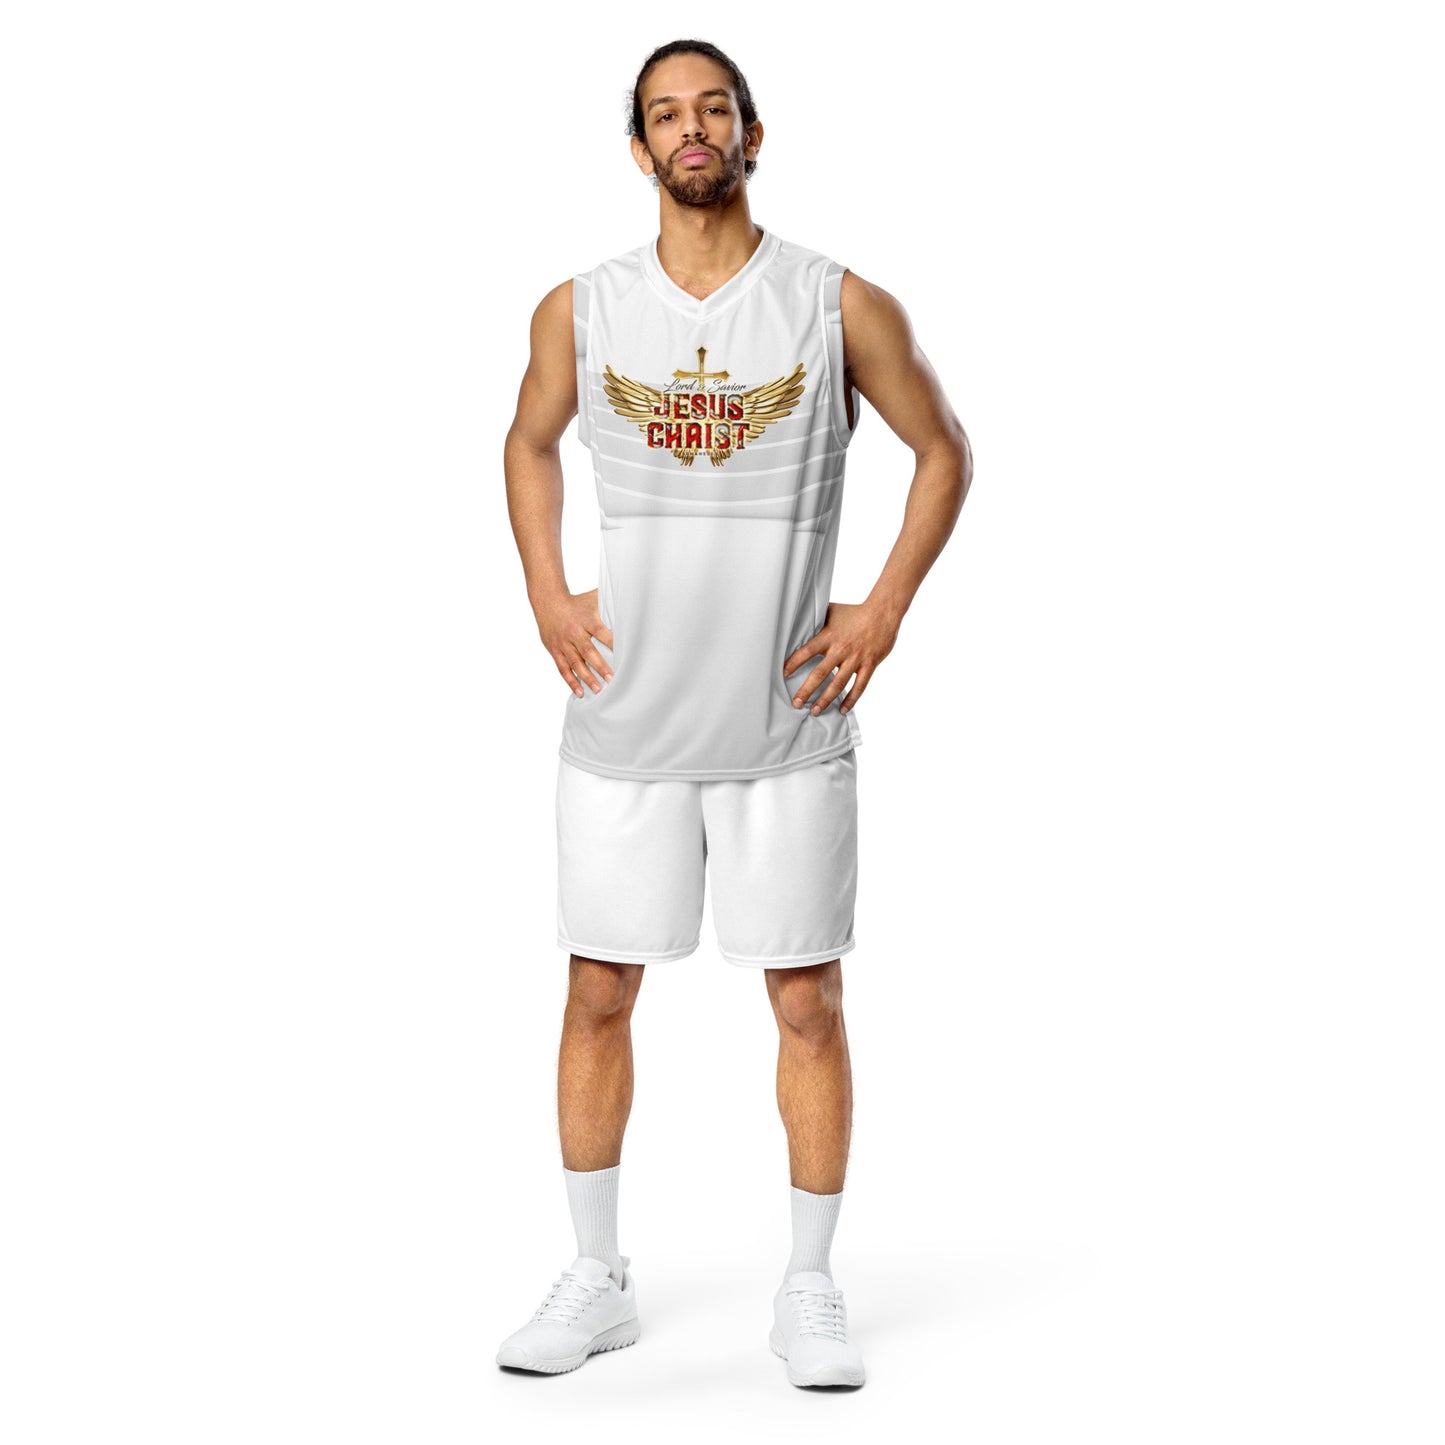 Jesus Christ unisex basketball jersey